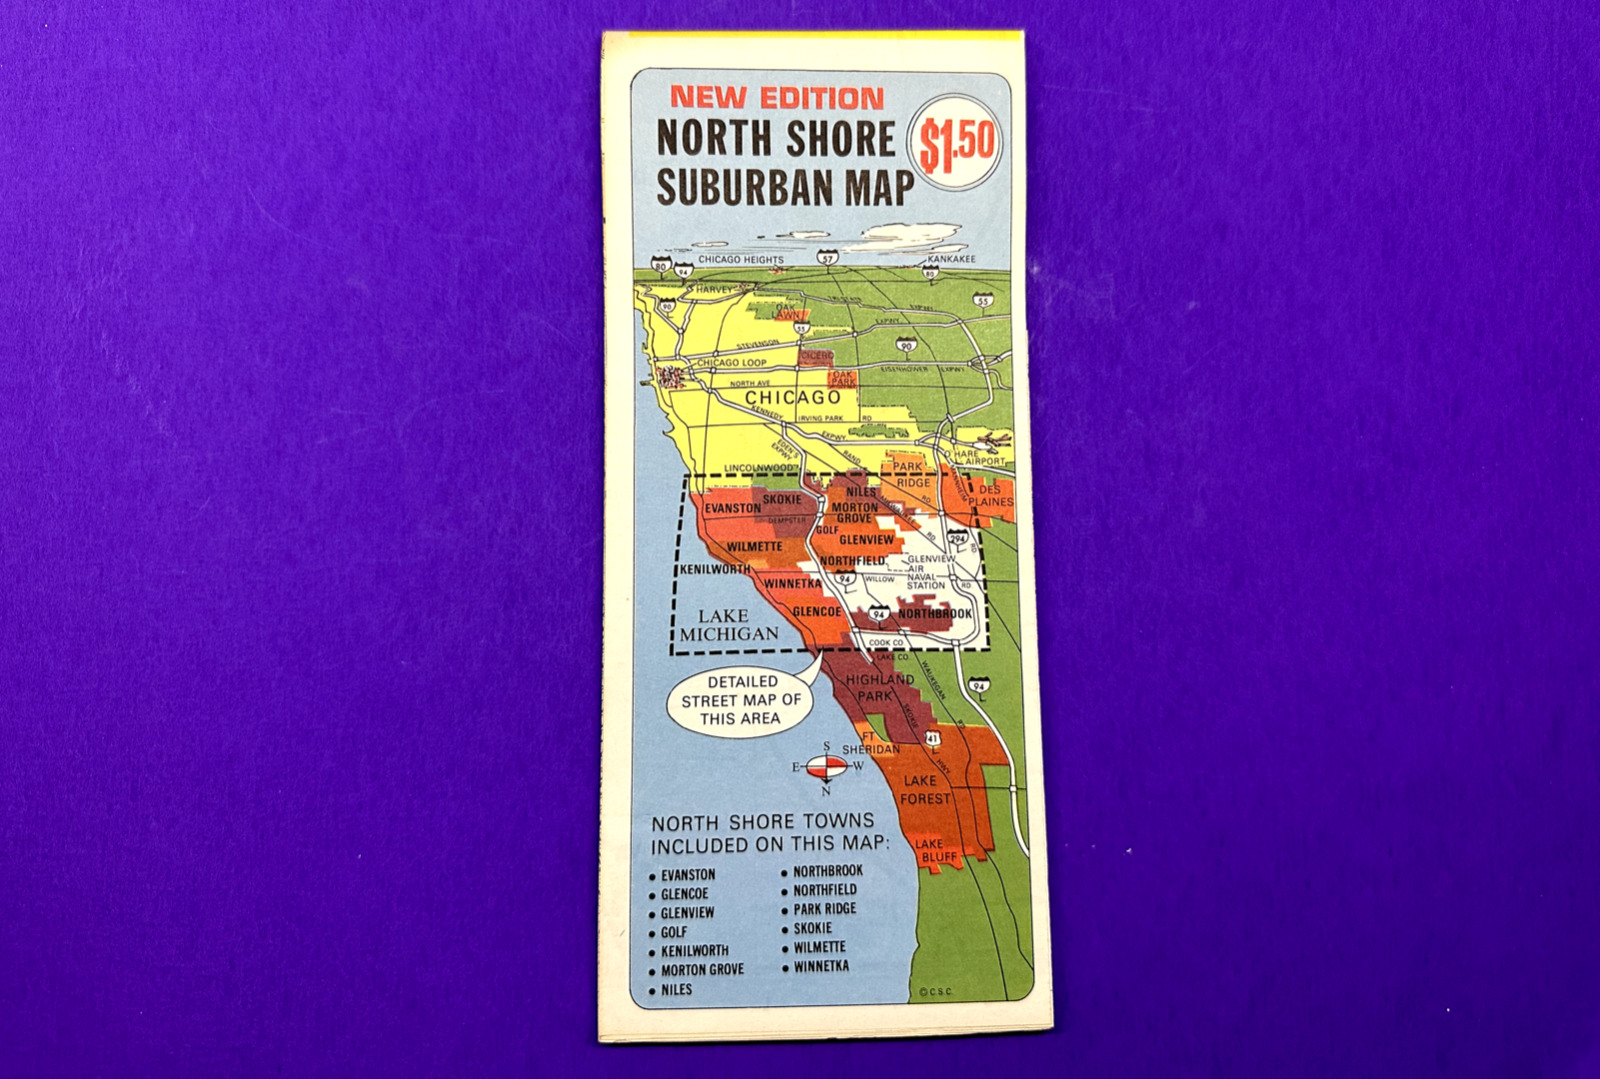 North Shore Suburban Map (New Edition)